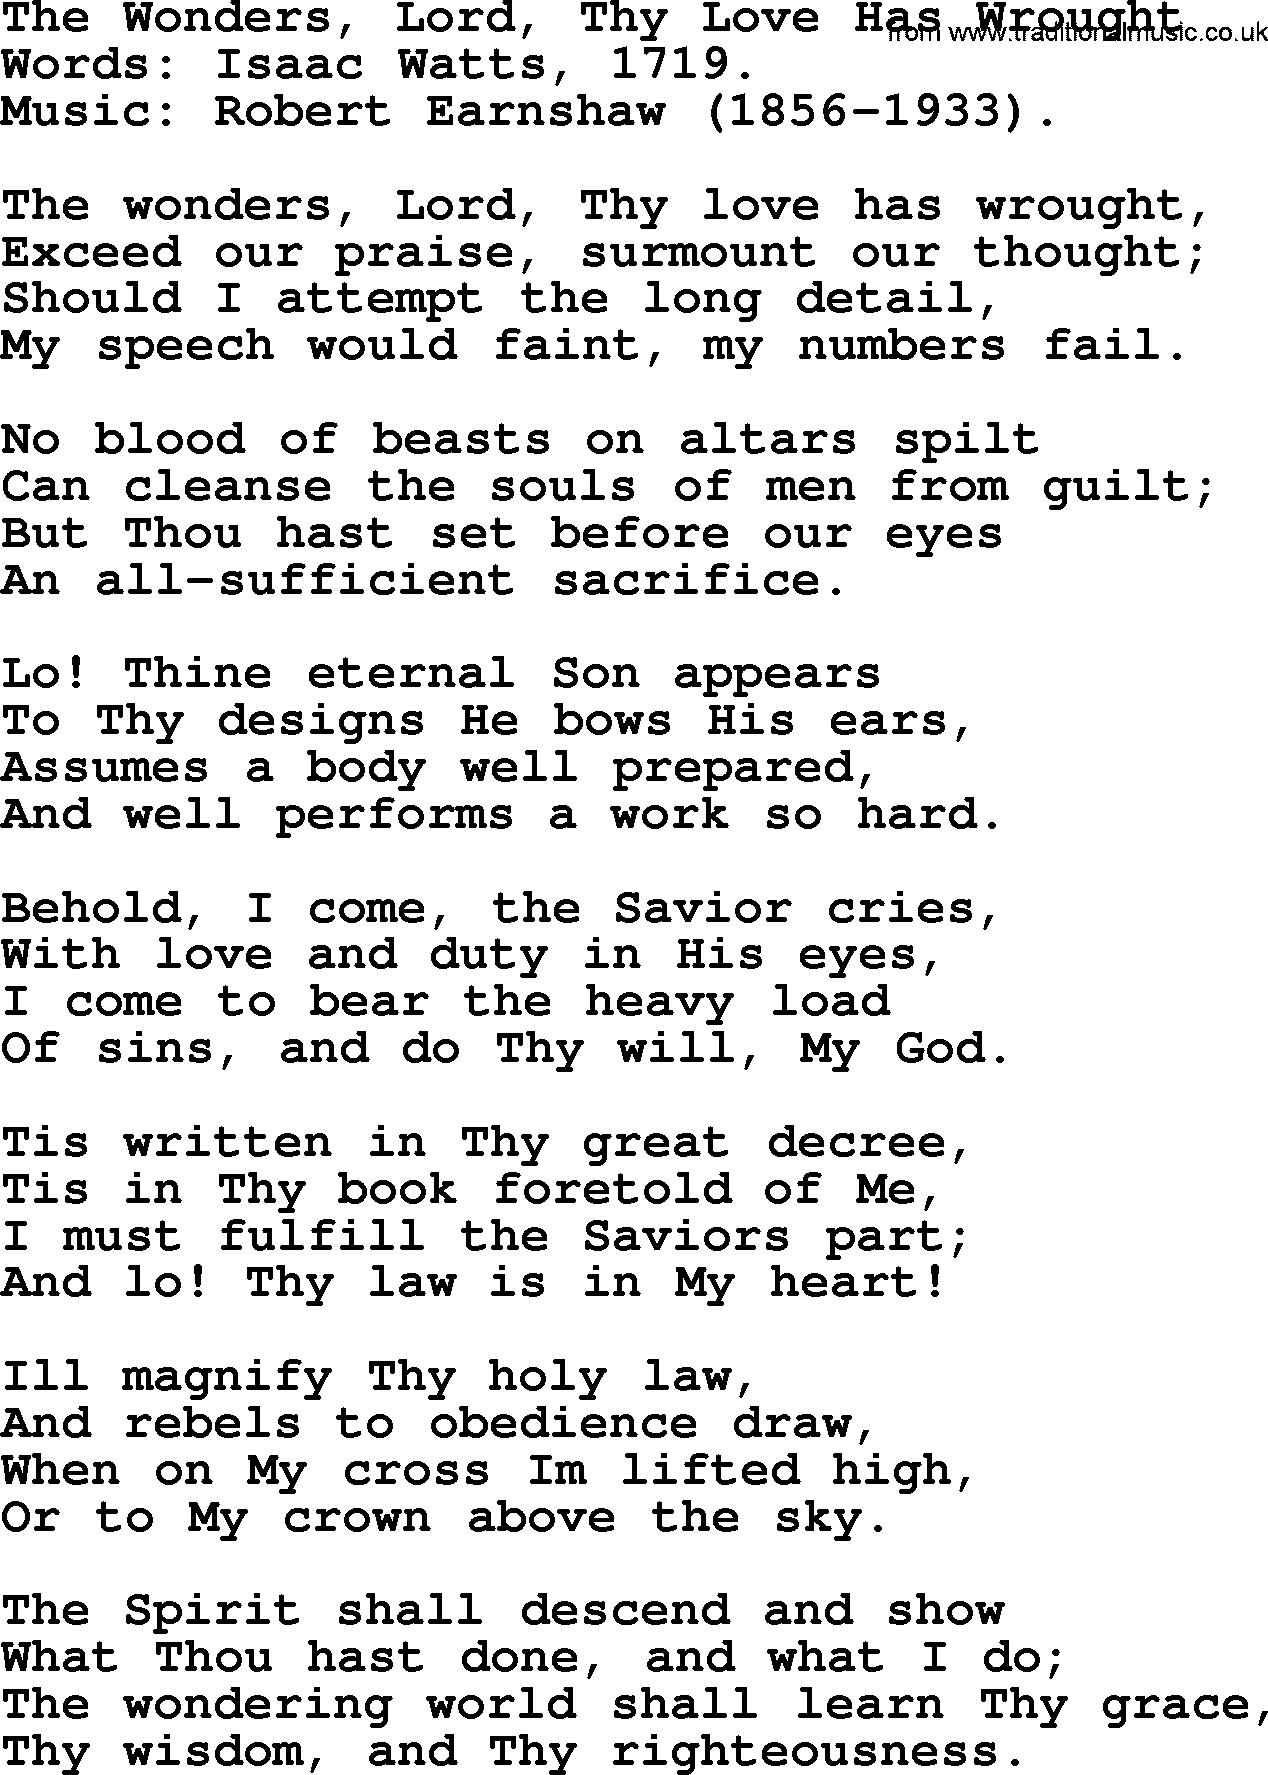 Isaac Watts Christian hymn: The Wonders, Lord, Thy Love Has Wrought- lyricss